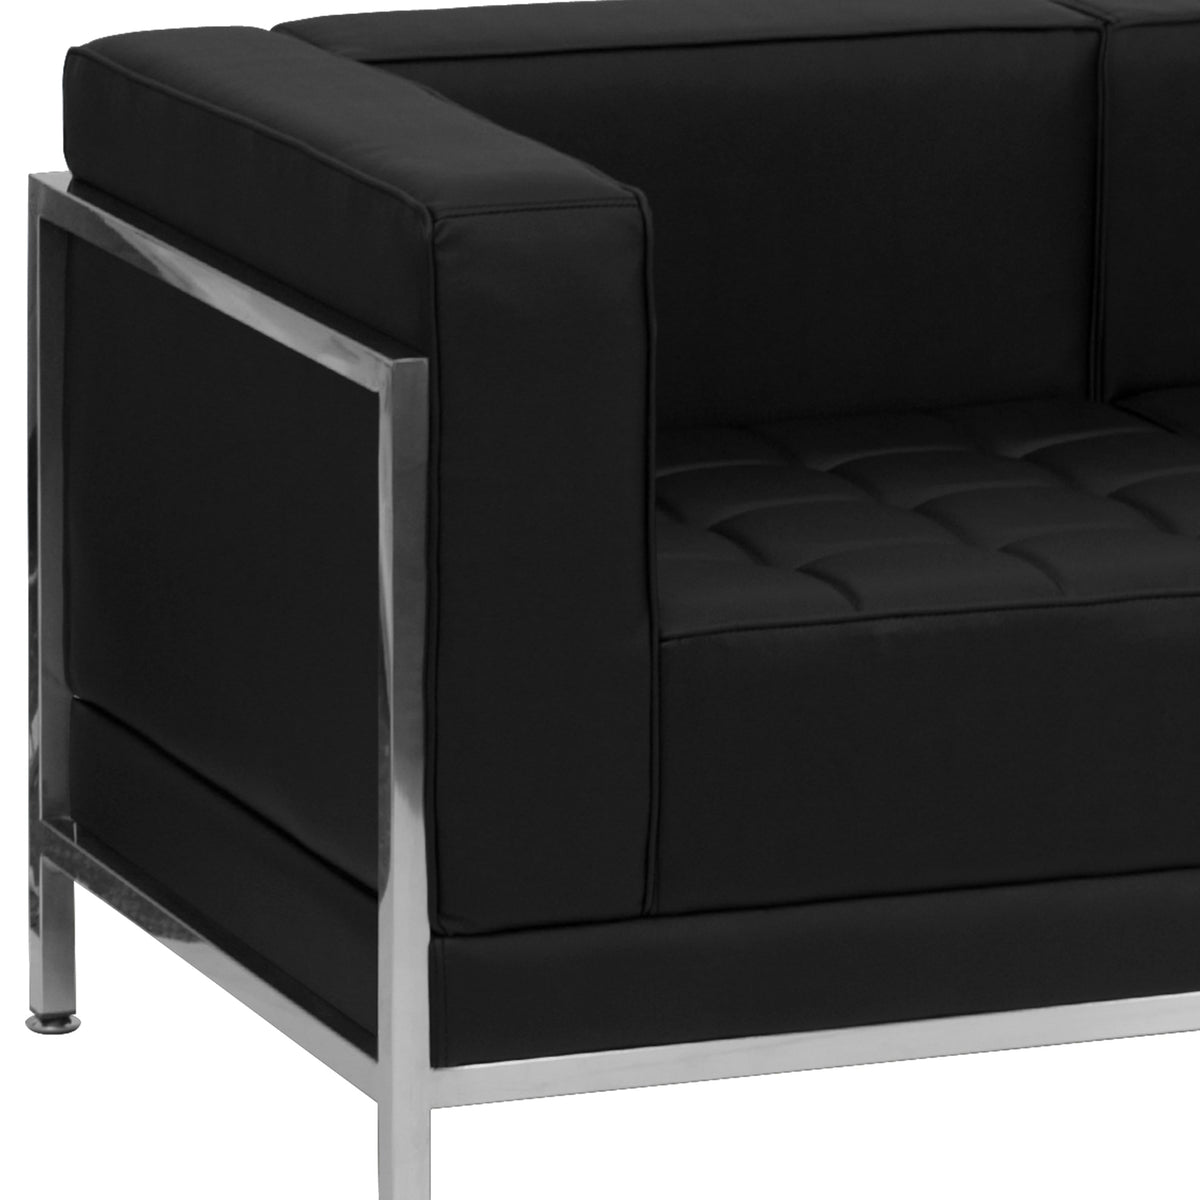 Black |#| Black LeatherSoft Modular Loveseat w/Quilted Tufted Seat &Encasing Frame